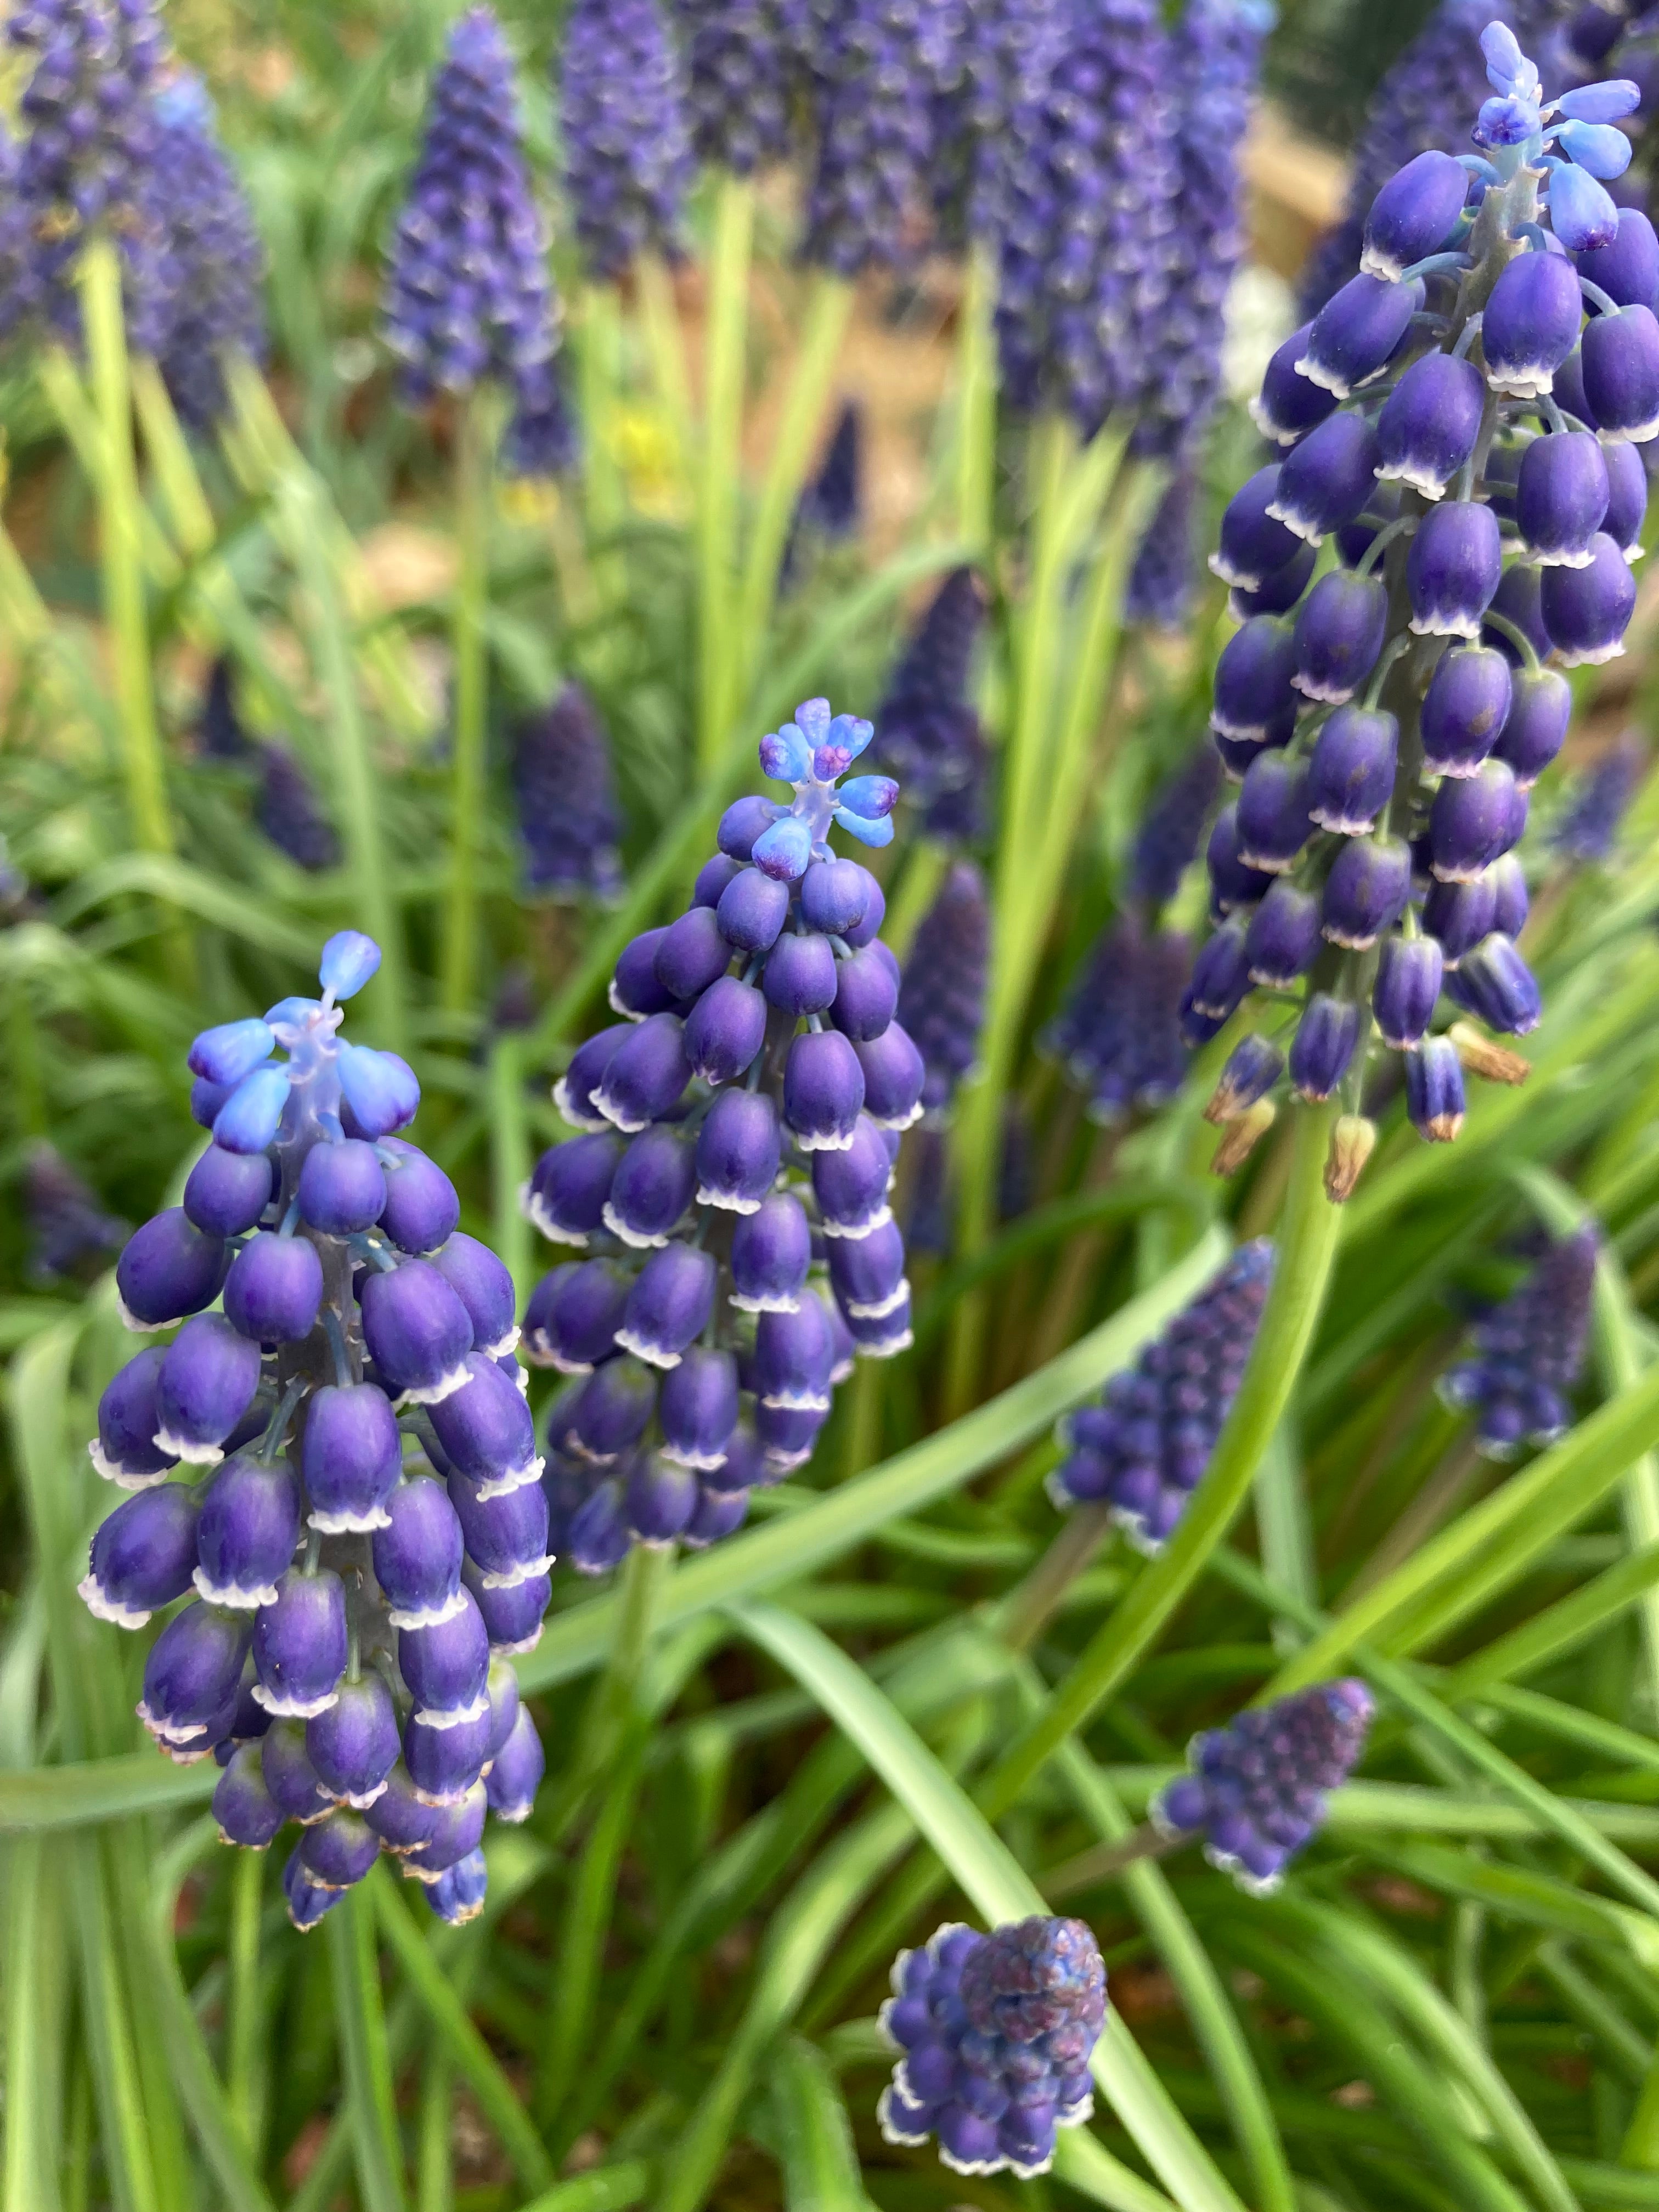 Grape Hyacinth or Muscari 'Neglectum' Bulbs Ready To Plant (Free UK Postage)